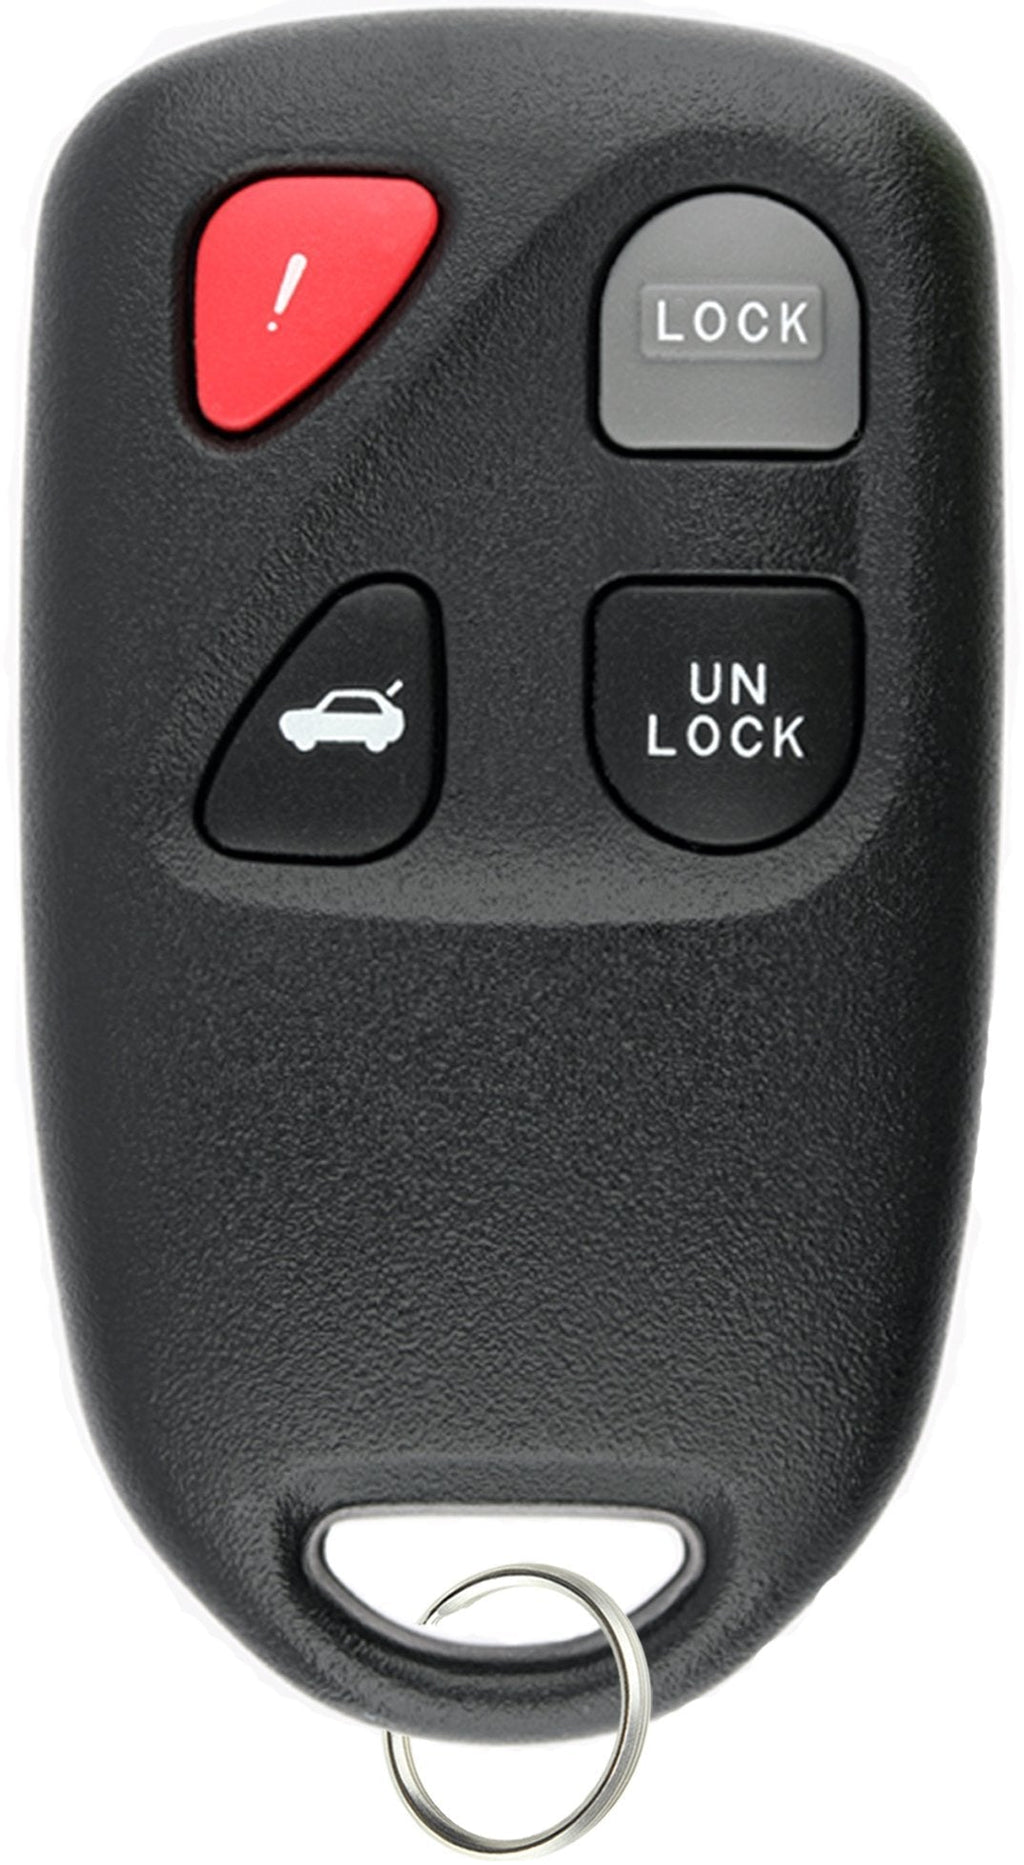  [AUSTRALIA] - KeylessOption Keyless Entry Remote Control Car Key Fob Clicker for KPU41805 Model 41805 Mazda 6